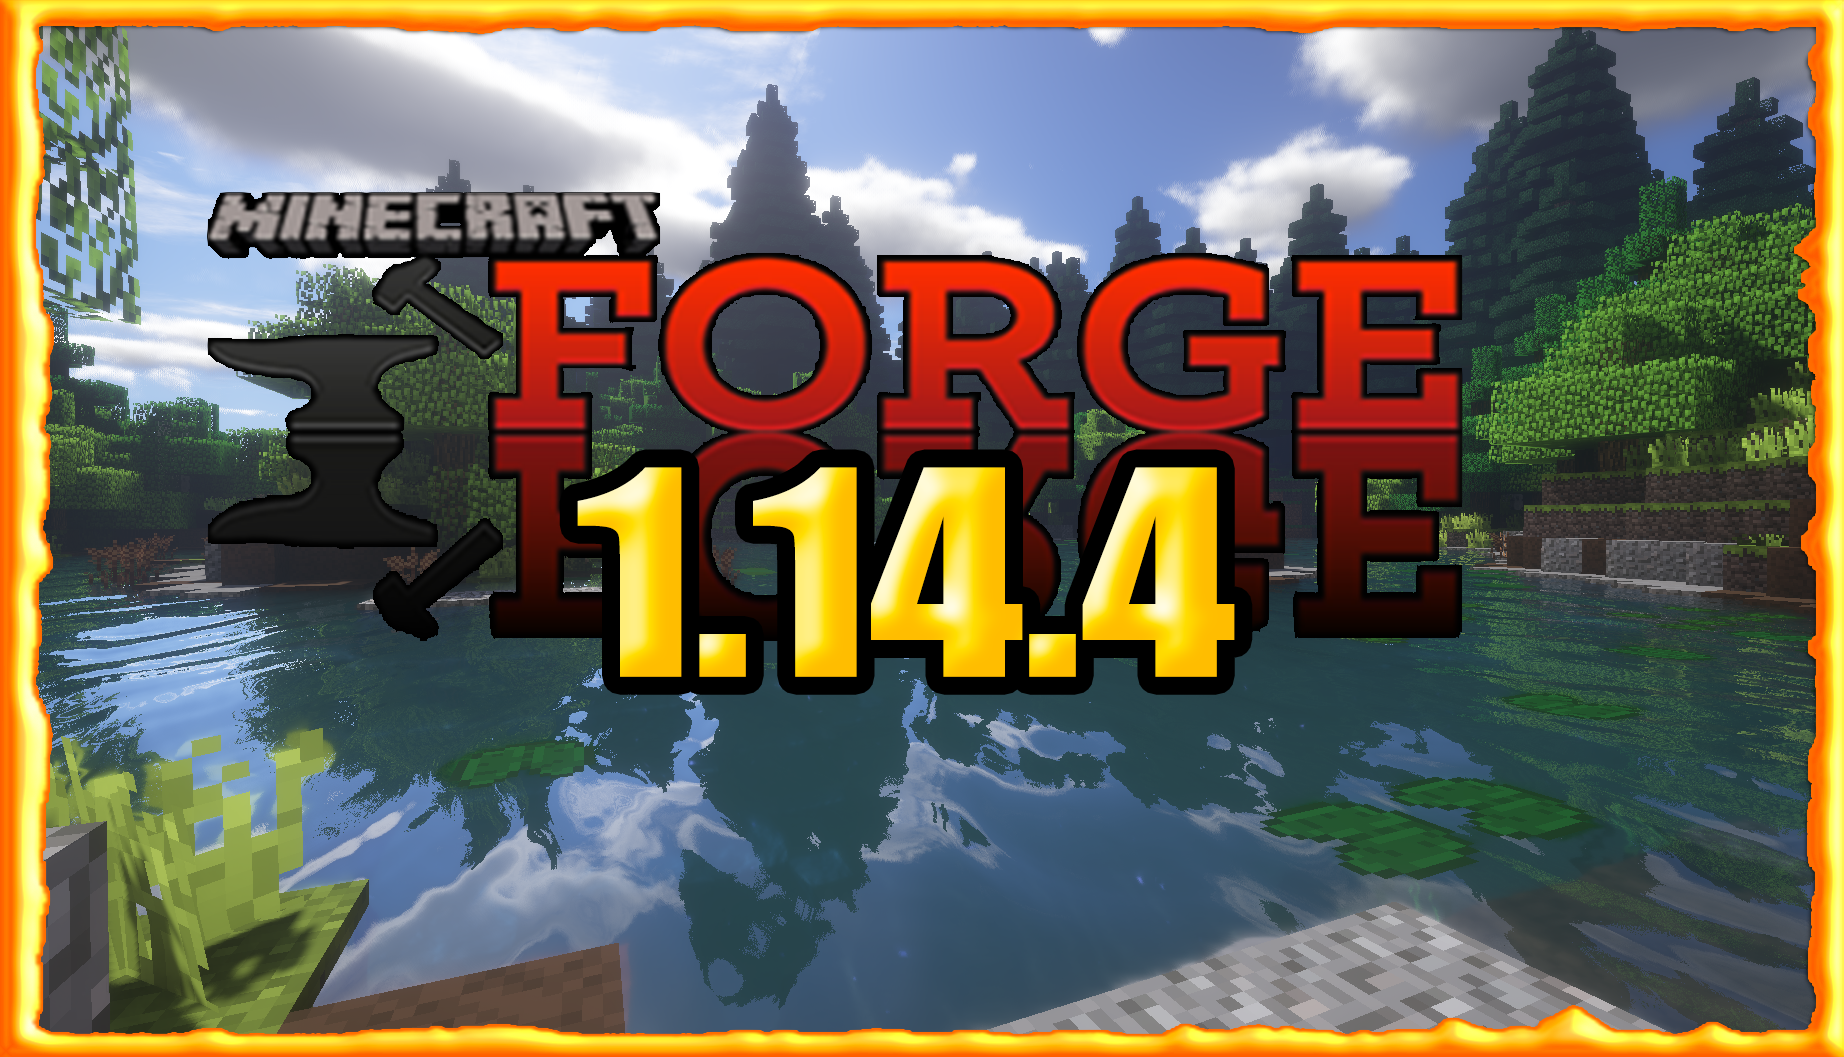 Curse forge 1.16 5. Фордж 1.14.4. Новая версия Forge. Обложка Curse Forge. Сайт Forge майнкрафт взломали.